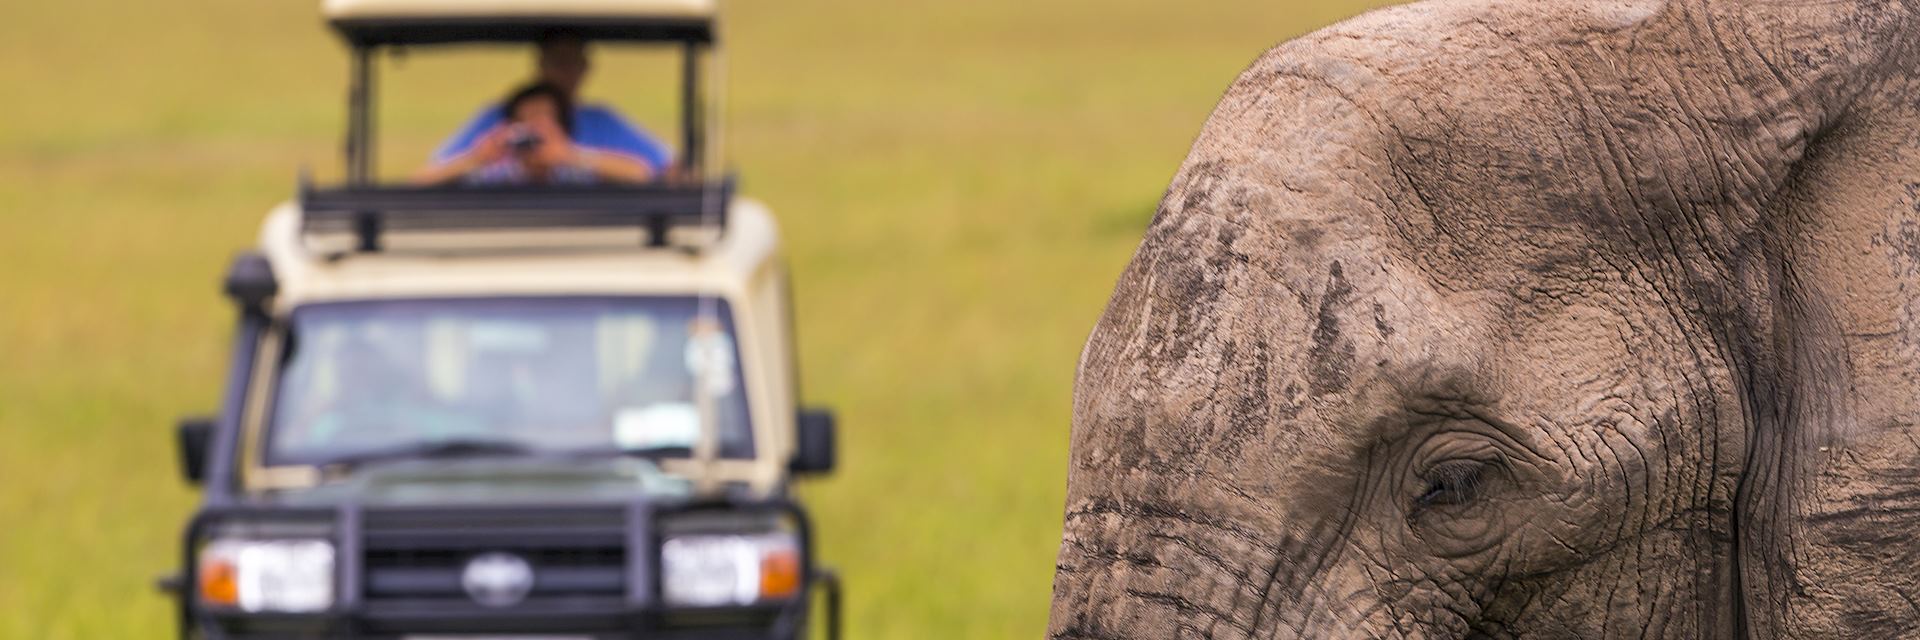 Getting close the elephants, Kenya